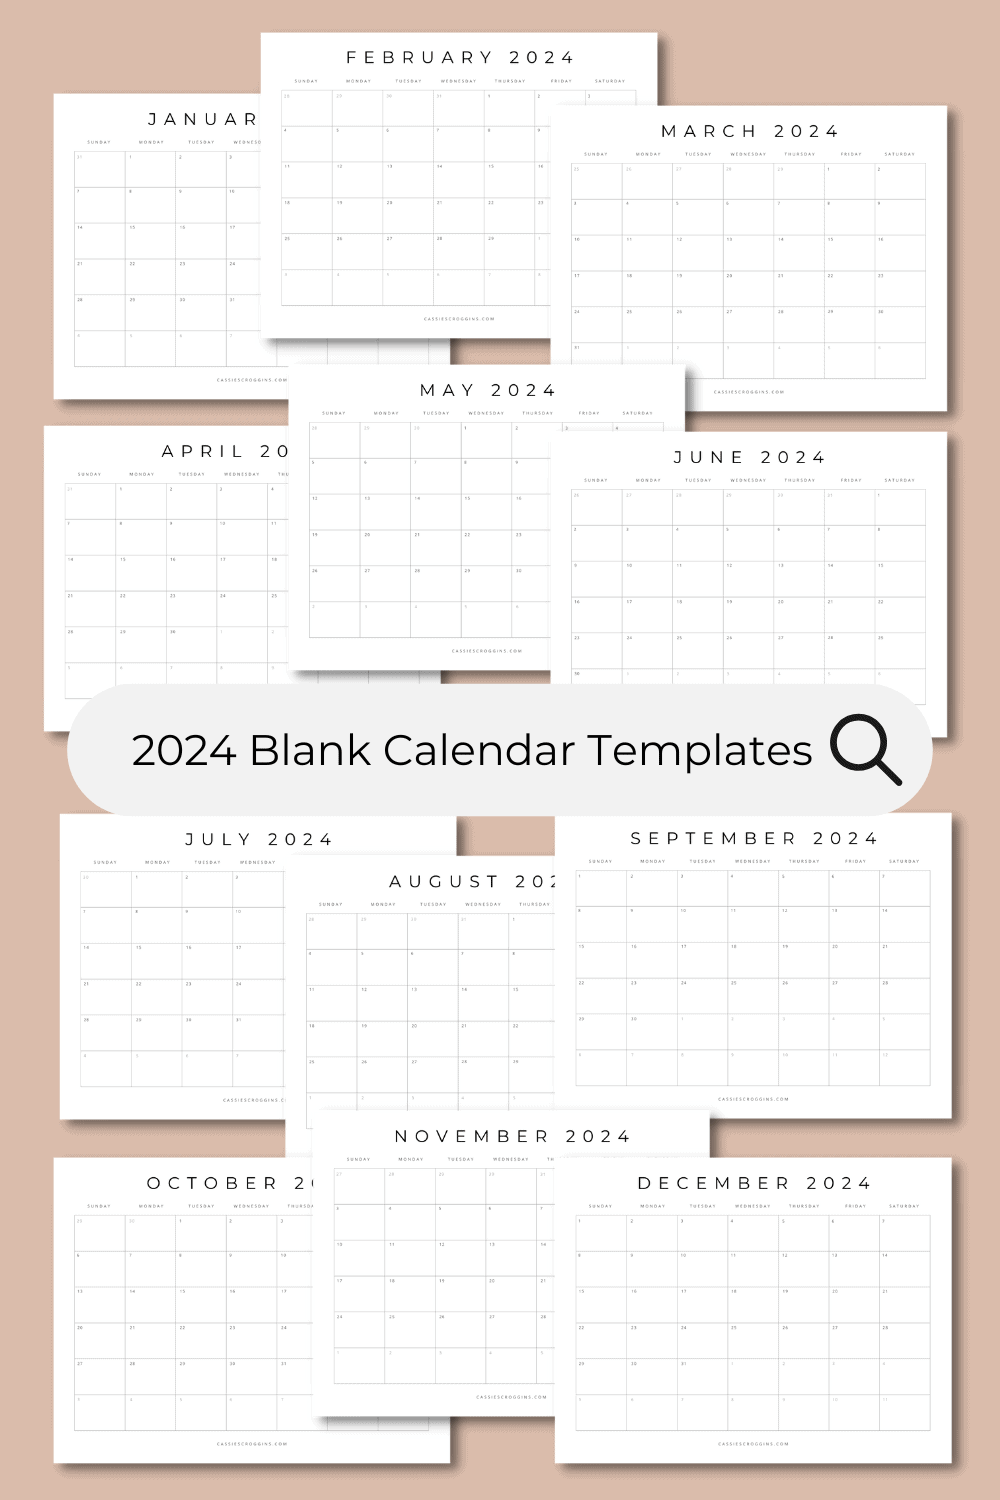 Free Printable 2024 Blank Calendar Templates (All 12 Months) intended for Free Printable Calendar 2024 Monthly Pdf Download